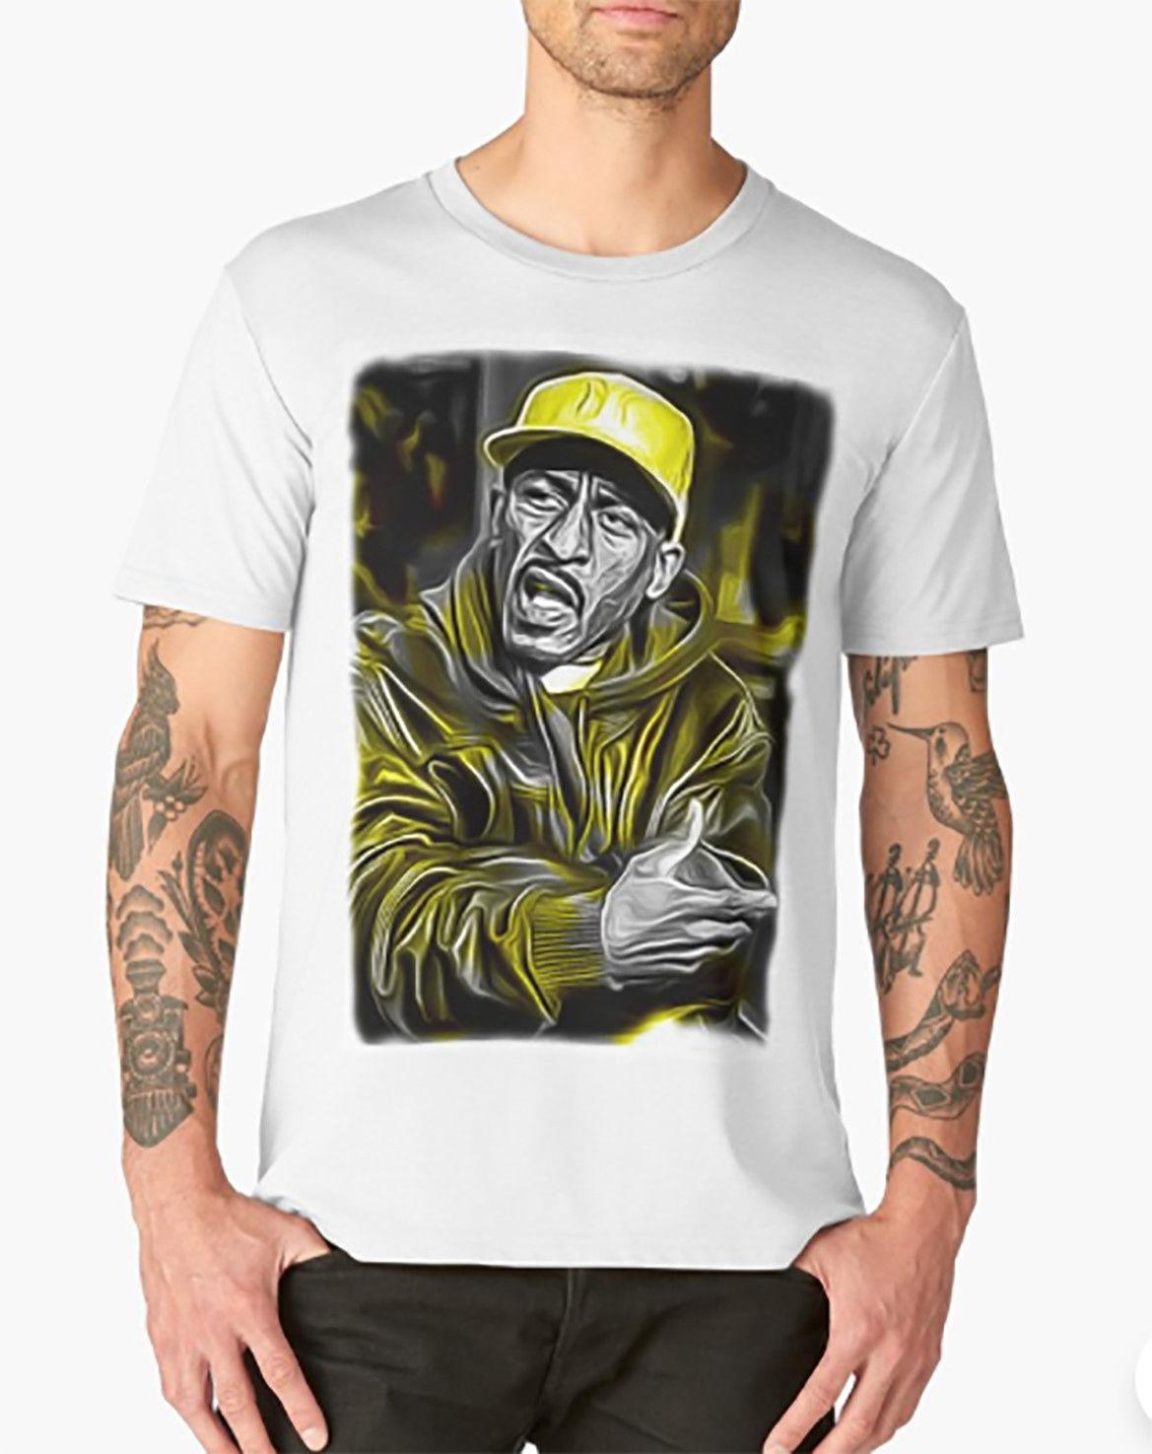 Buy Legendas Rakim Rap Hooded T-Shirt Cult Print Hip Hop Classic Art Short Sleeve Plus Size T-Shirt Color Print Shirt